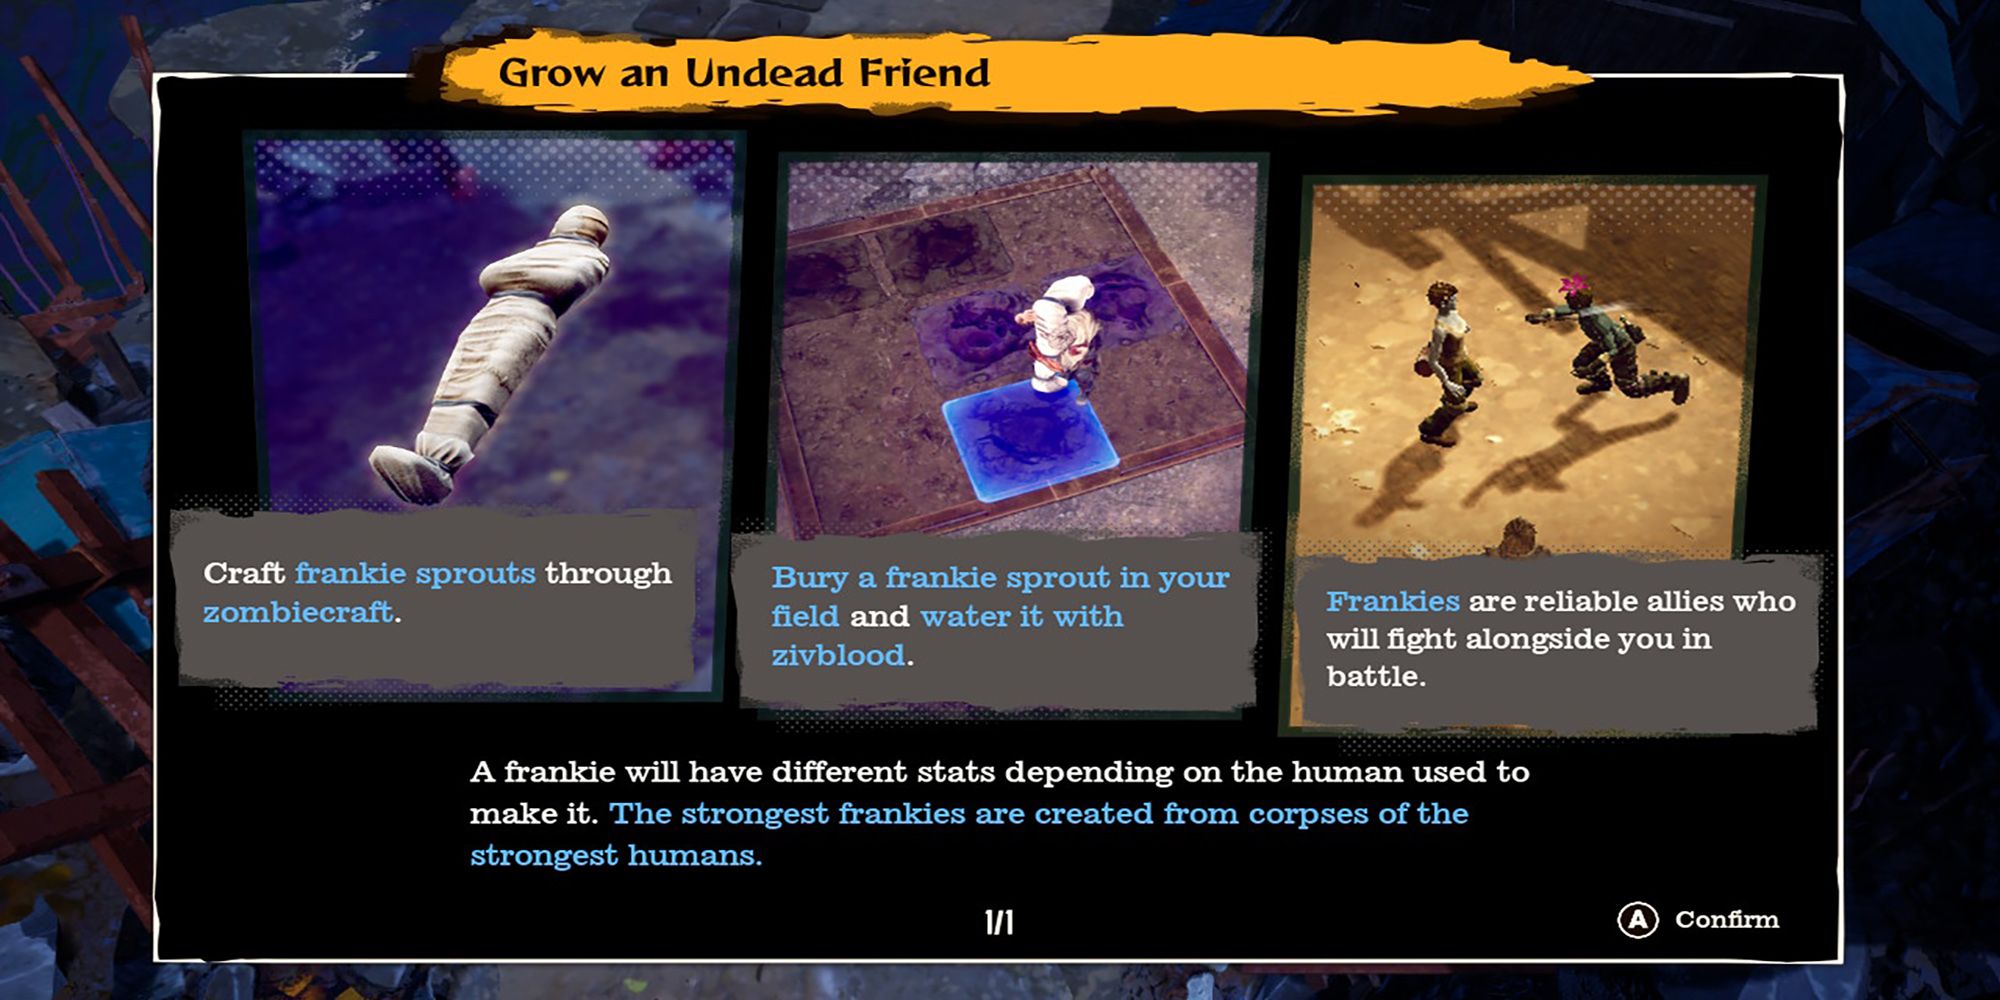 The Grown An Undead Friend tutorial teaches players how to farm Frankies in Deadcraft.